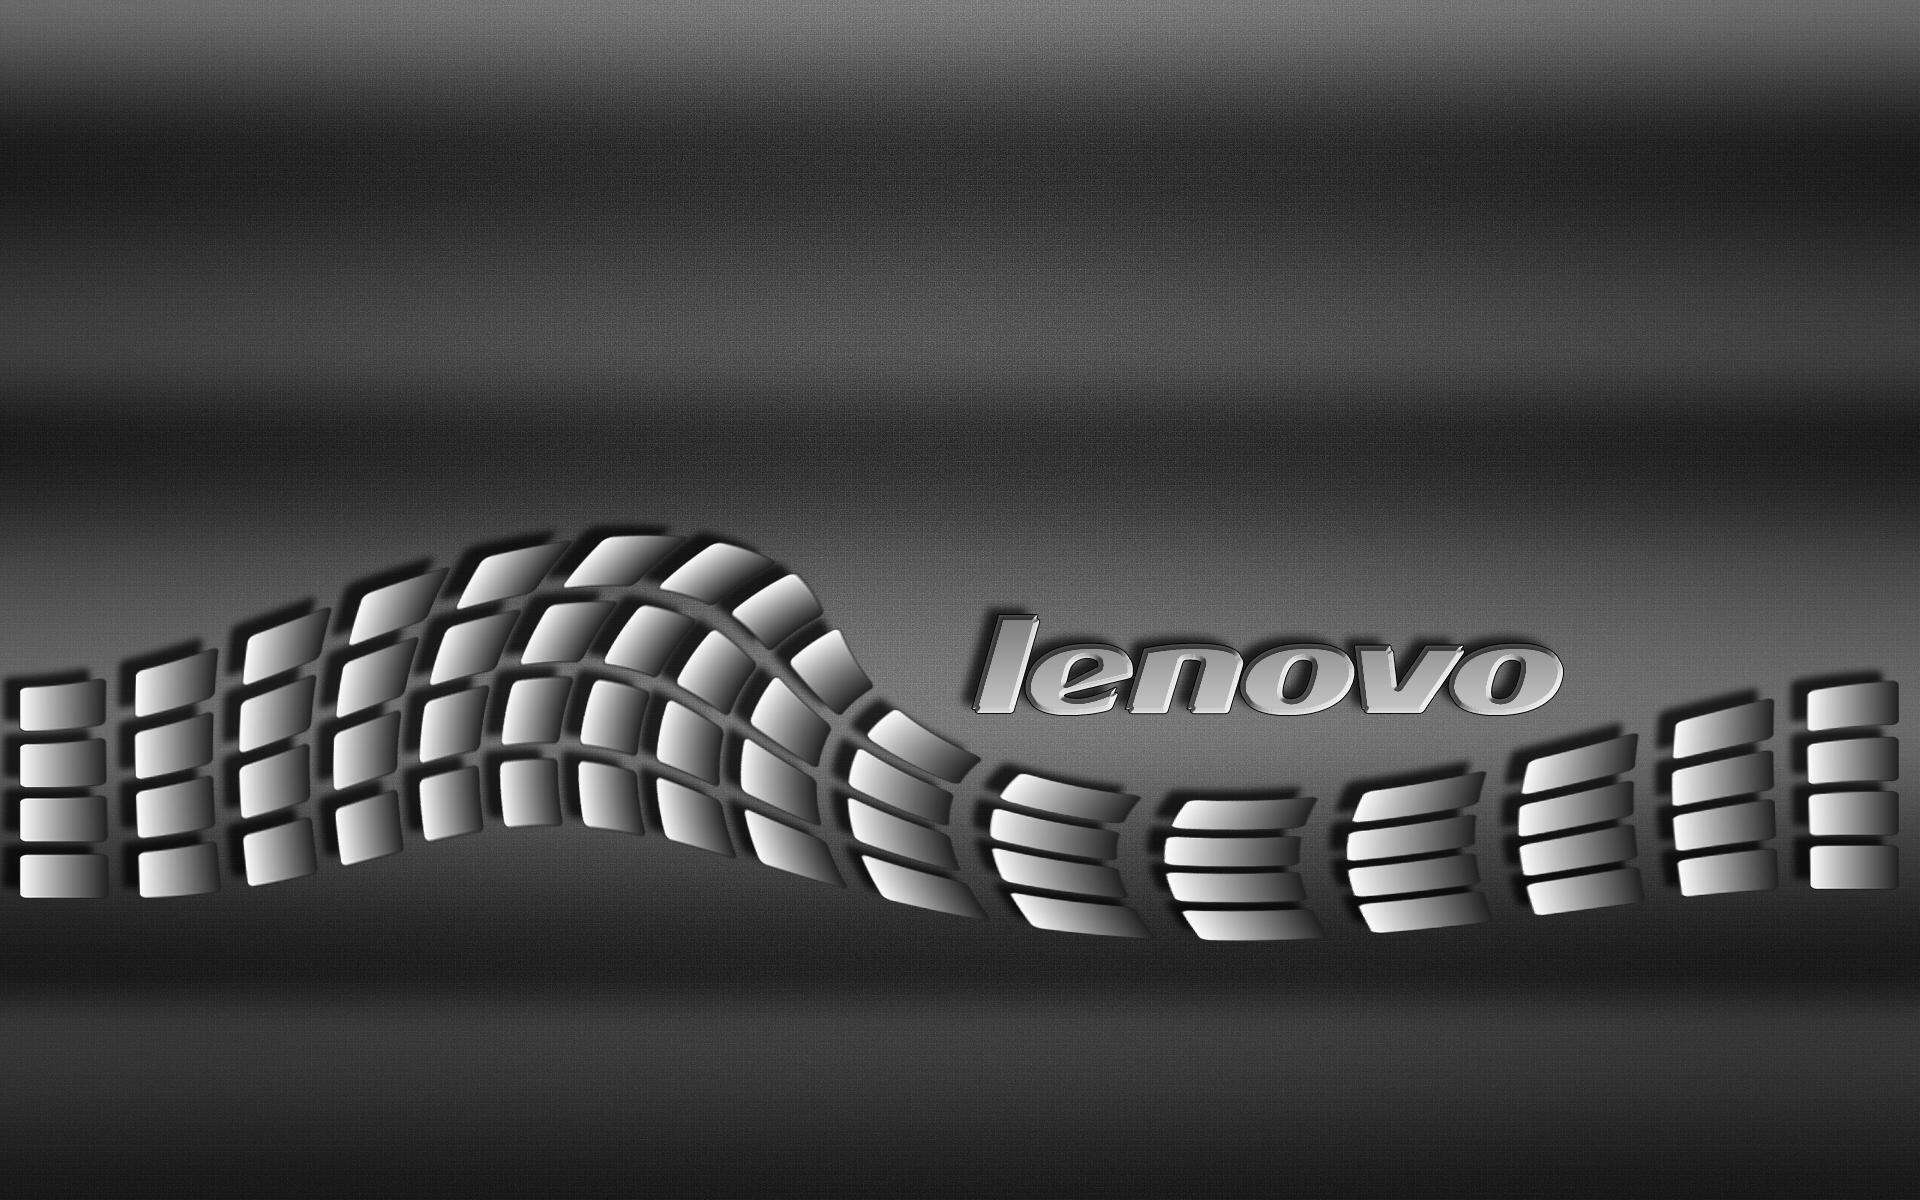  Lenovo  Wallpapers  HD  Wallpaper  Cave